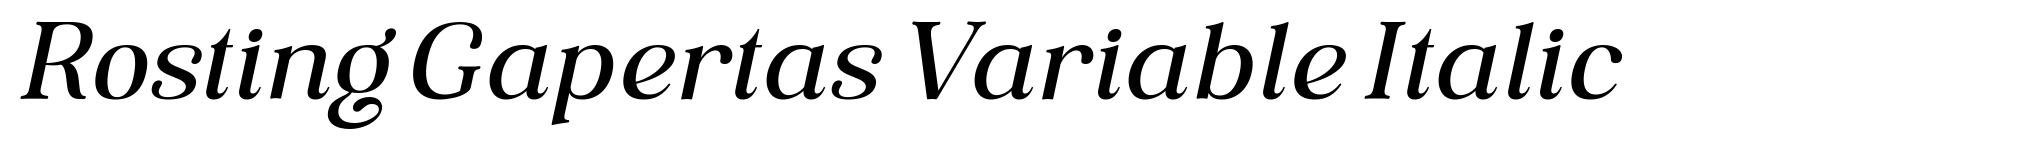 Rosting Gapertas Variable Italic image